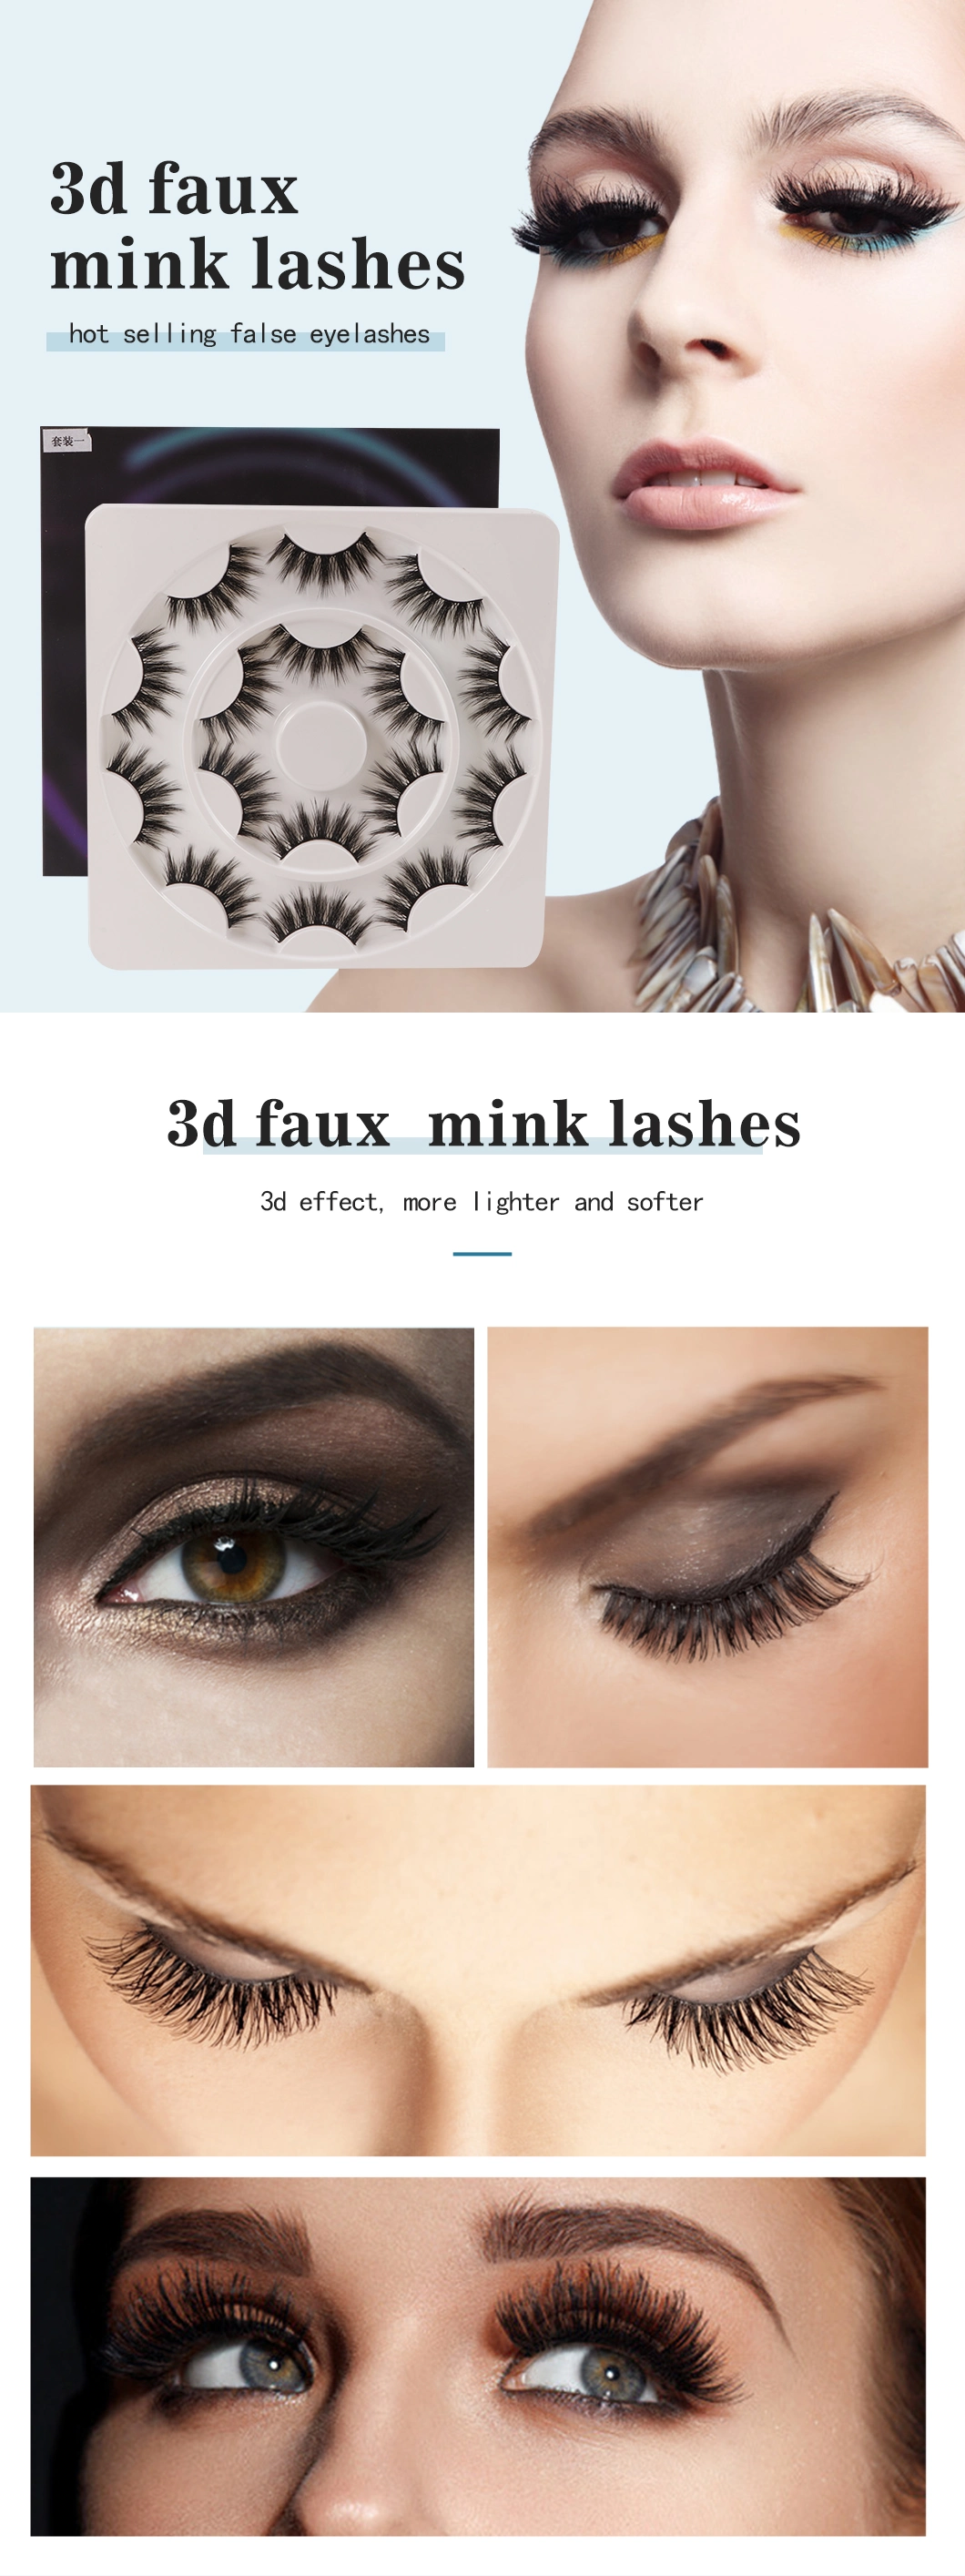 Wholesale 100% Cruelty Free Eyelashes 3D 5D Faux Mink Eyelashes Private Label Silk Mink Eyelashes